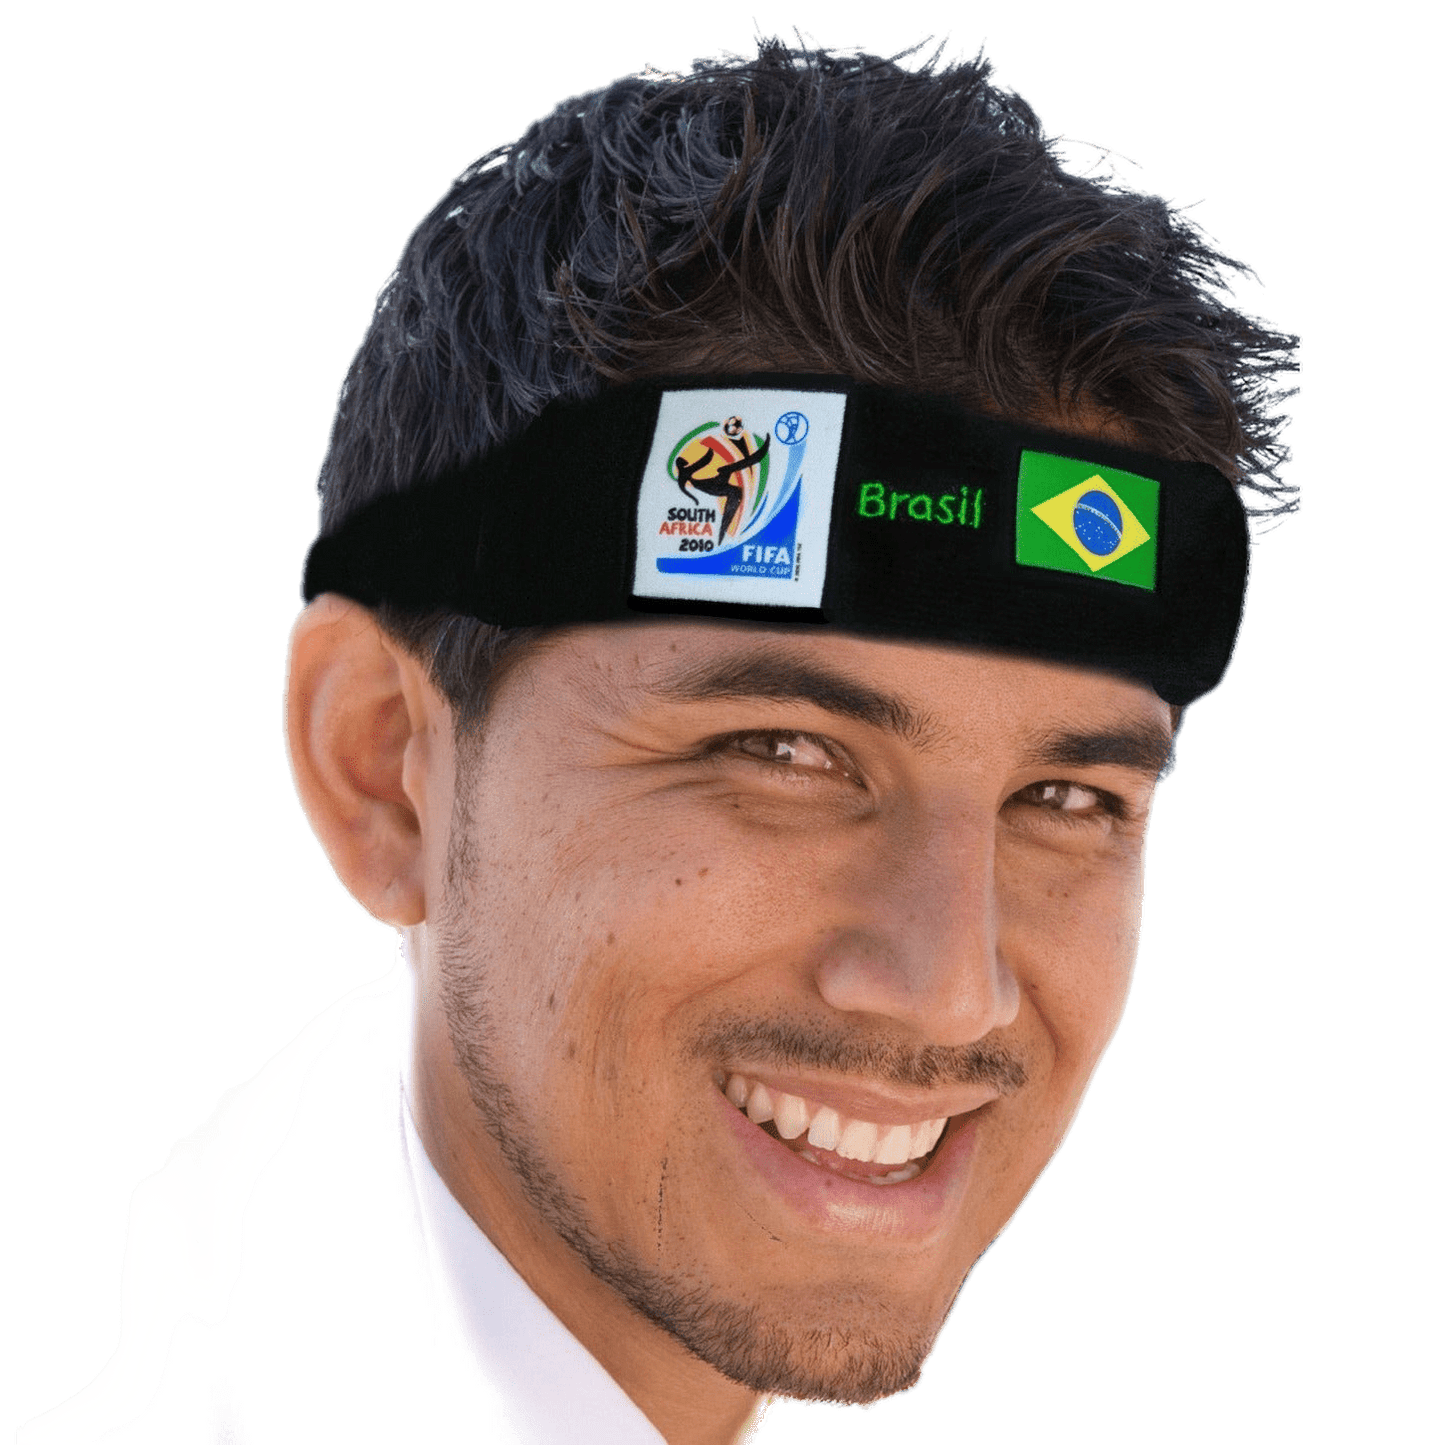 Retro Soccer Fan Headband - 29 Countries 2010 games - VIP Extensions